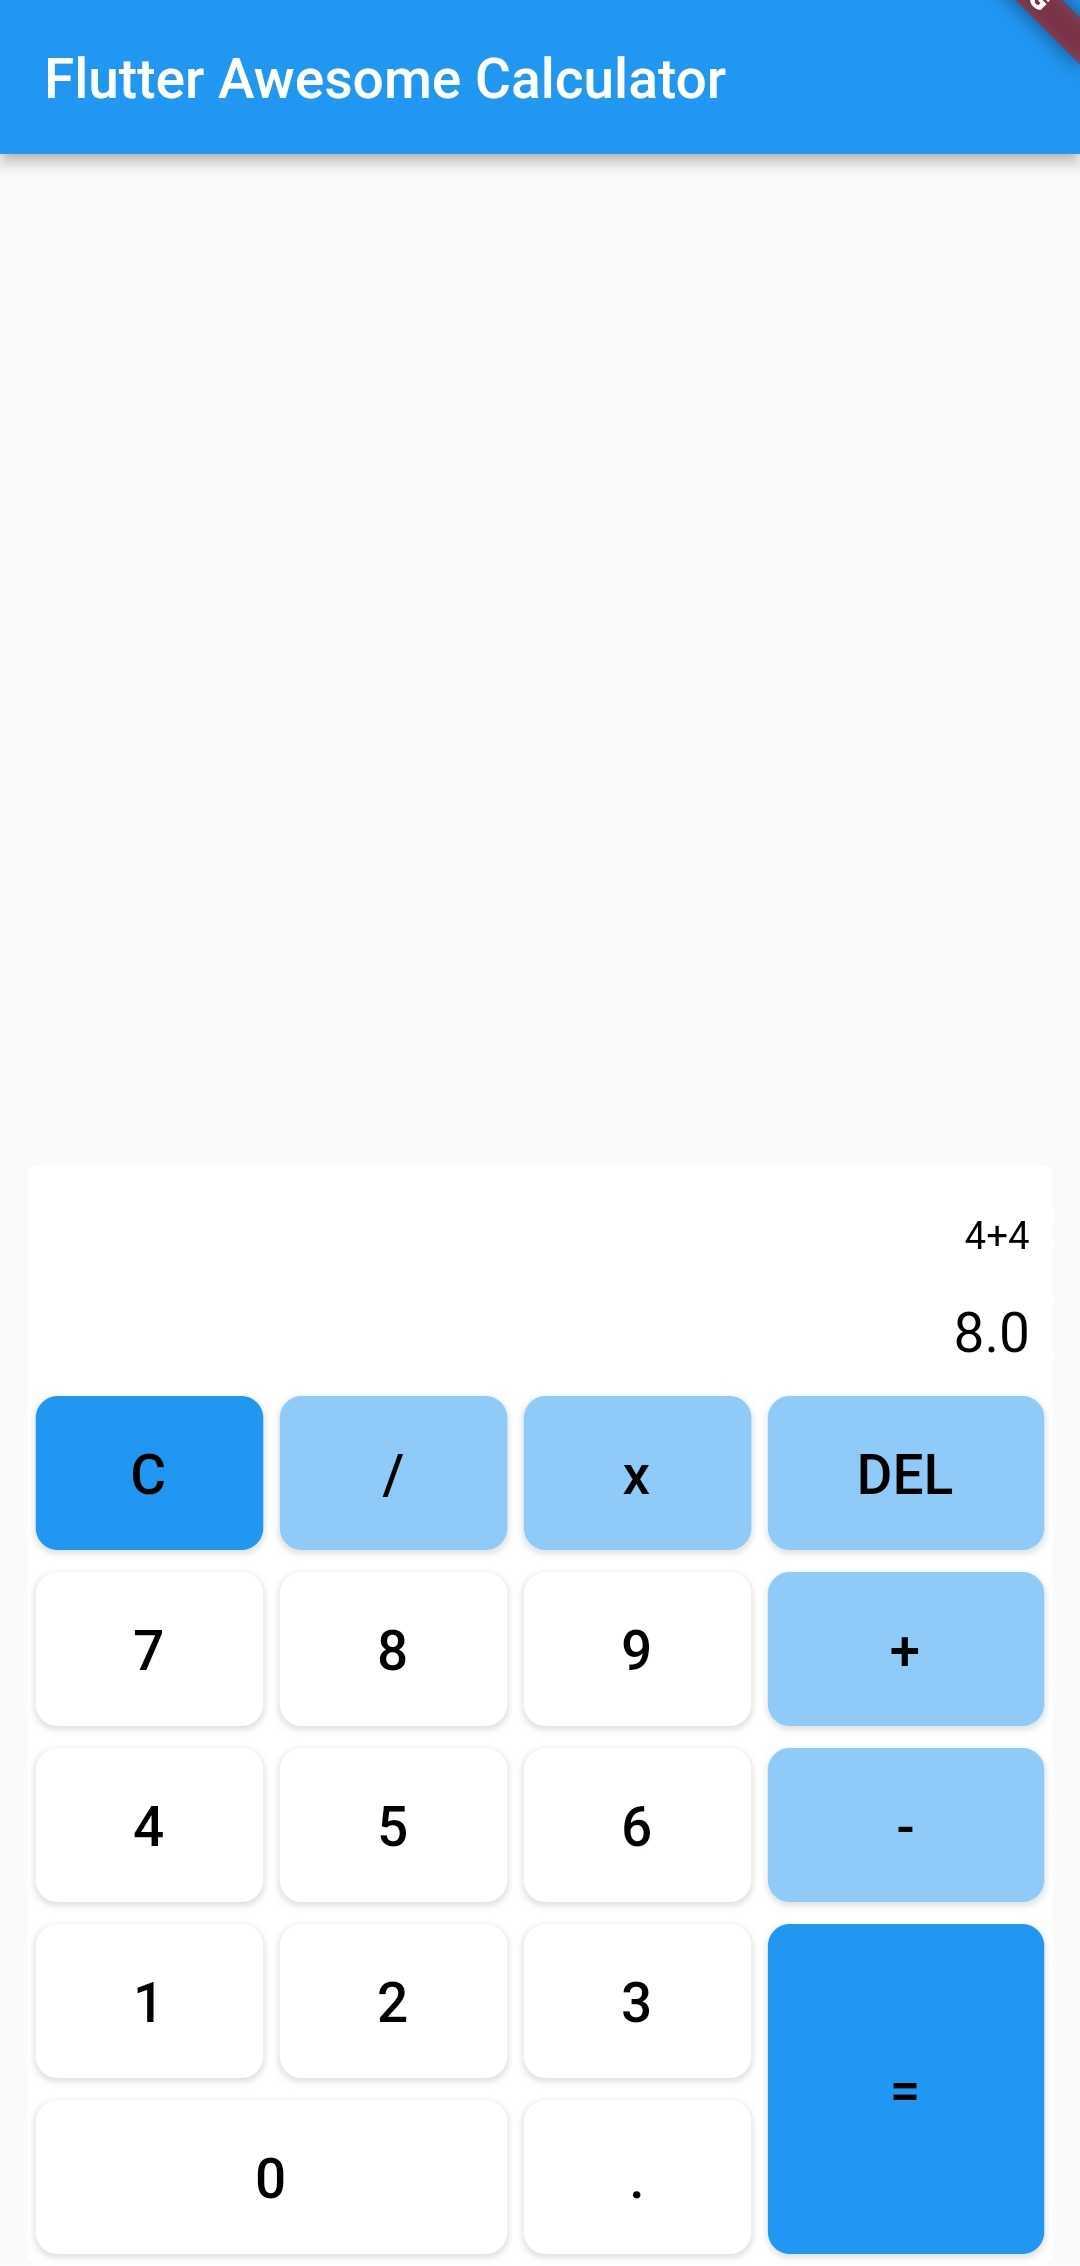 Calculator UI